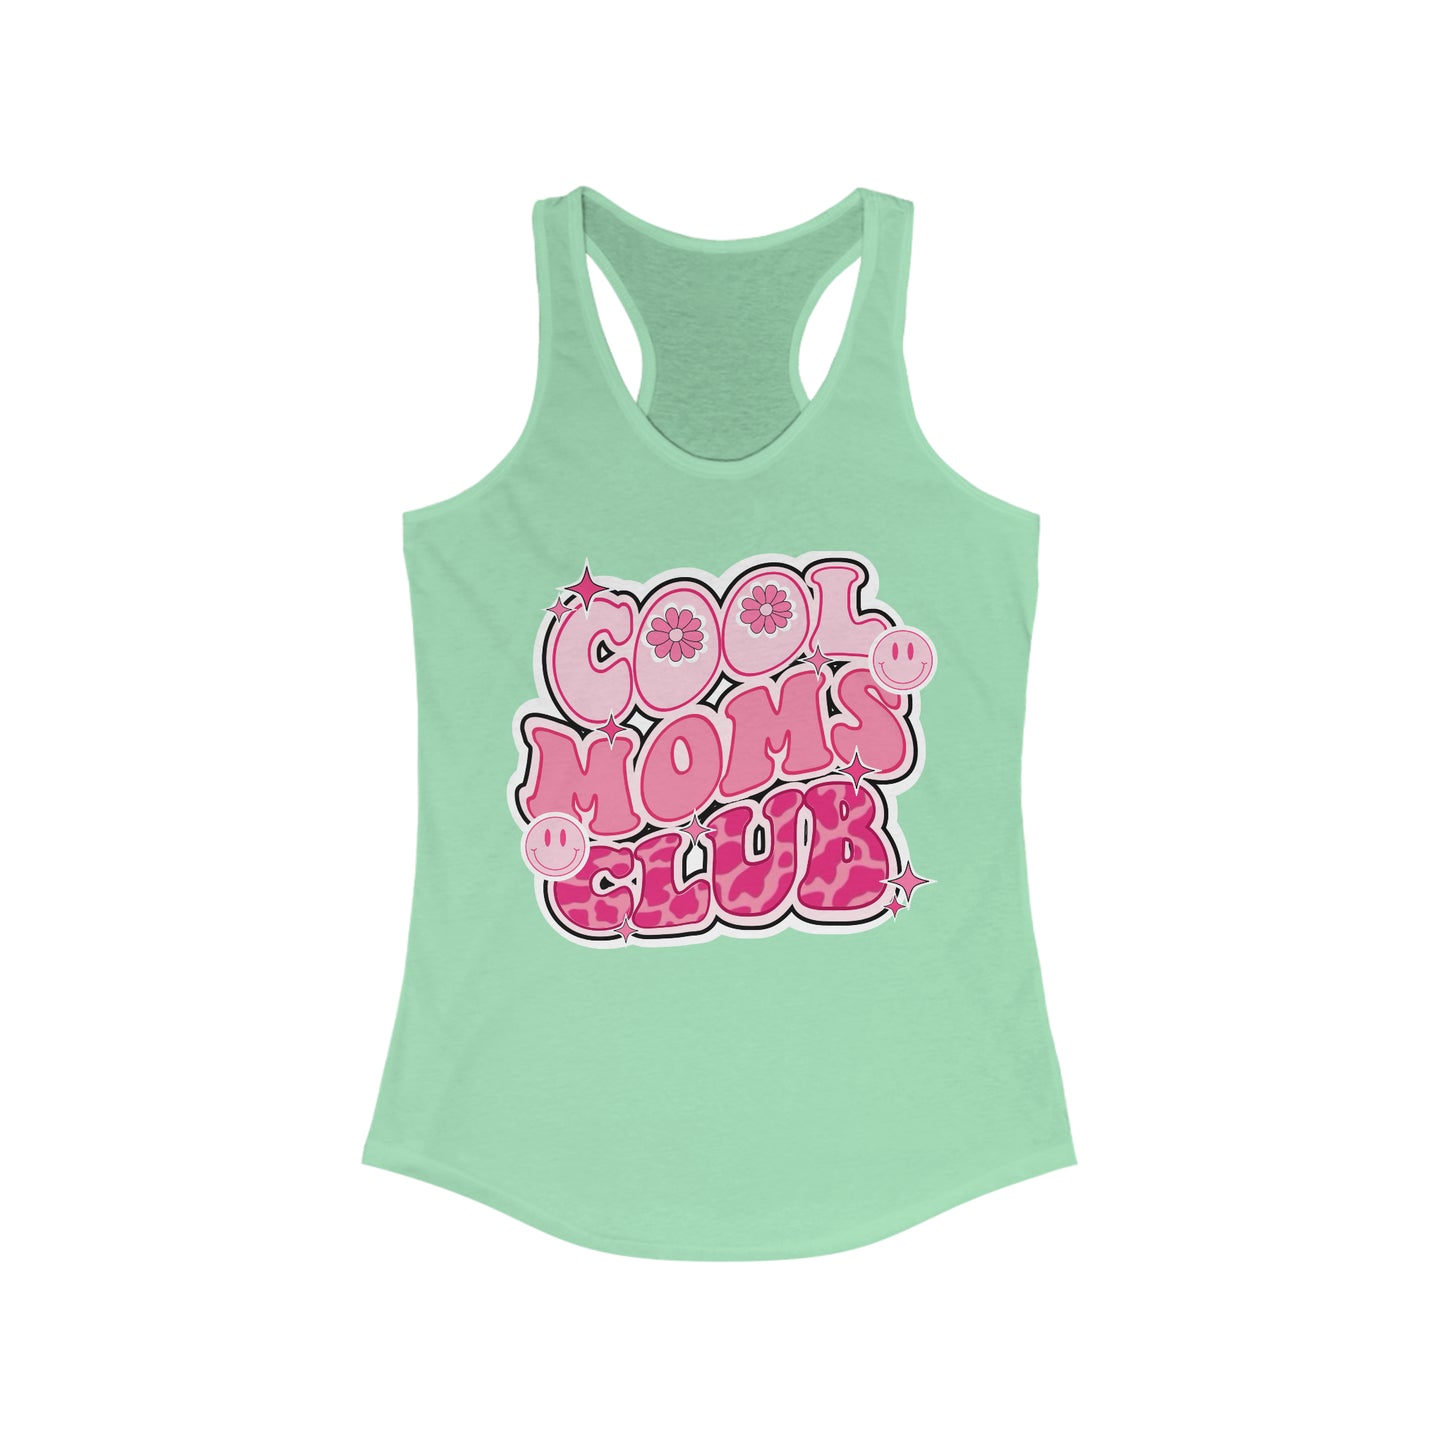 Cool Moms Club Pink - Women's Ideal Racerback Tank